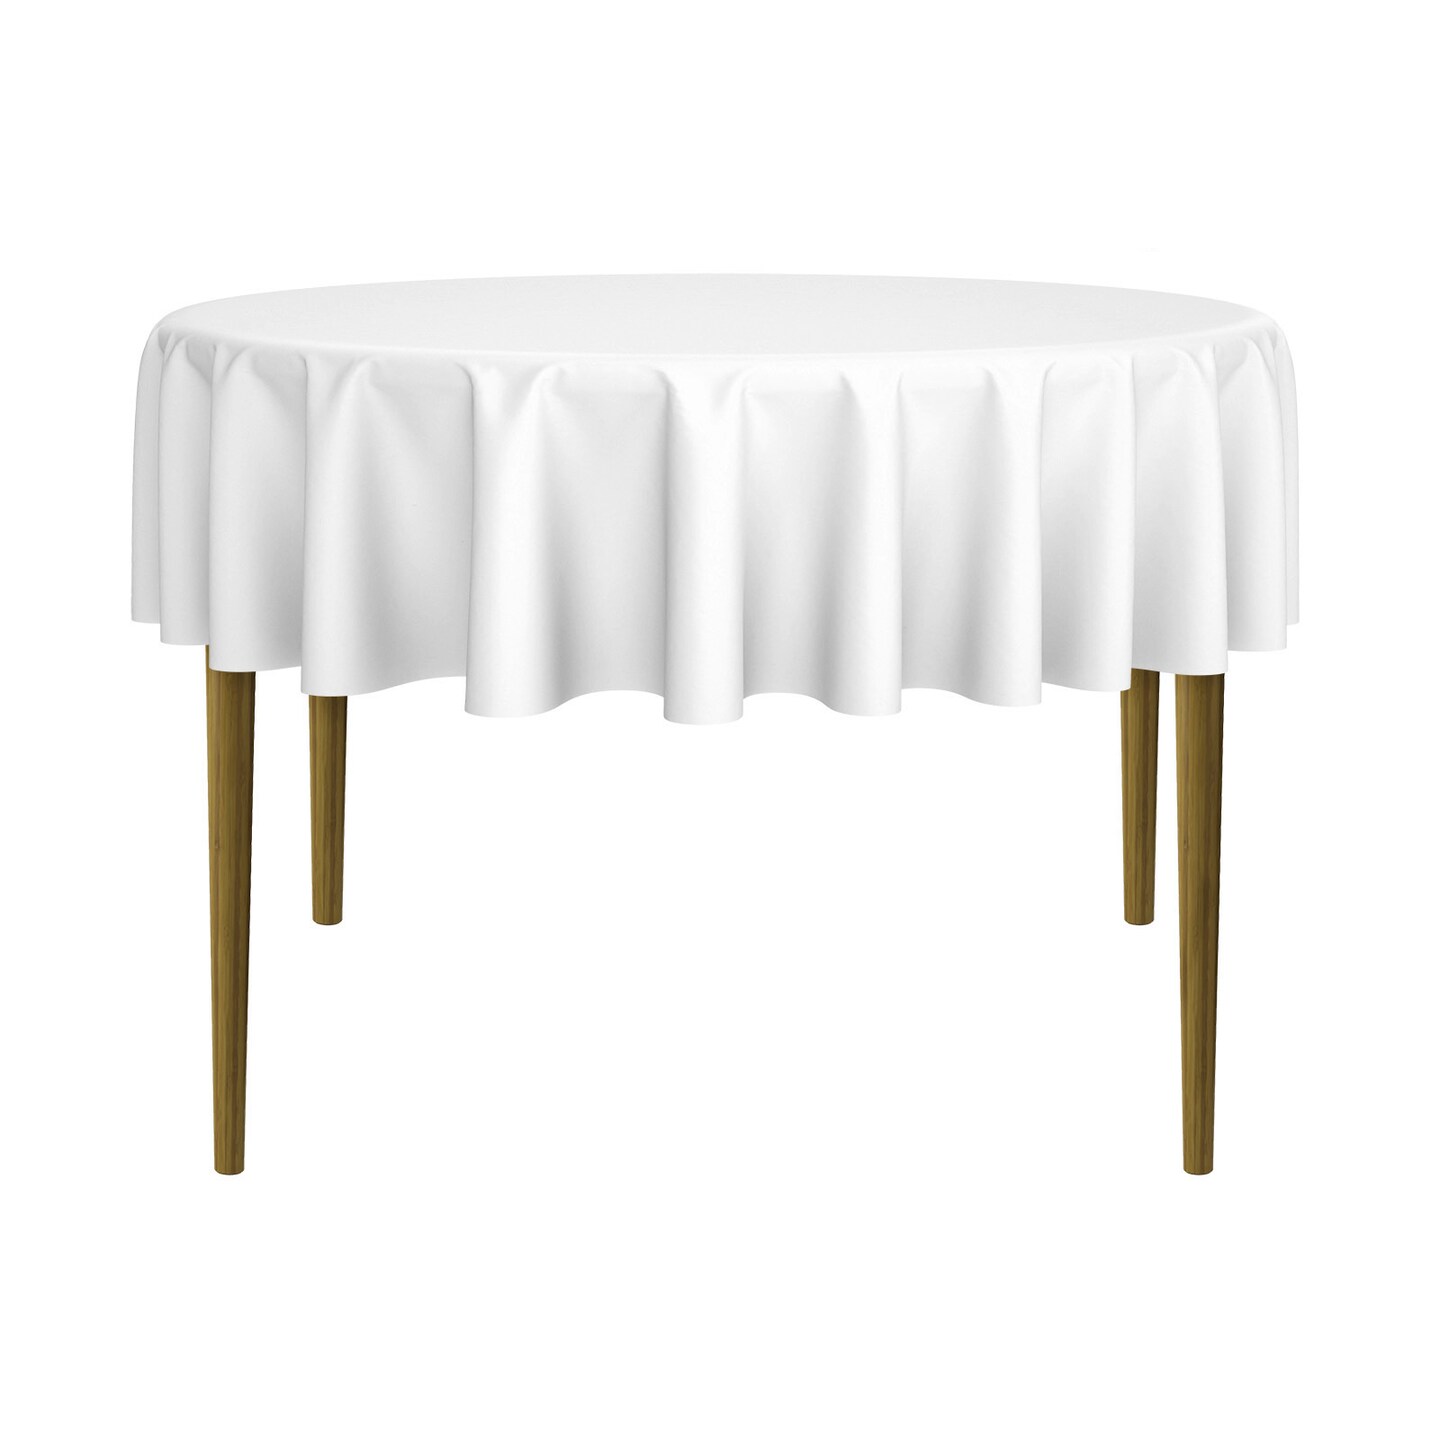 Lann's Linens - 10 Premium Round Tablecloths for Wedding / Banquet / Restaurant - Polyester Fabric Table Cloths